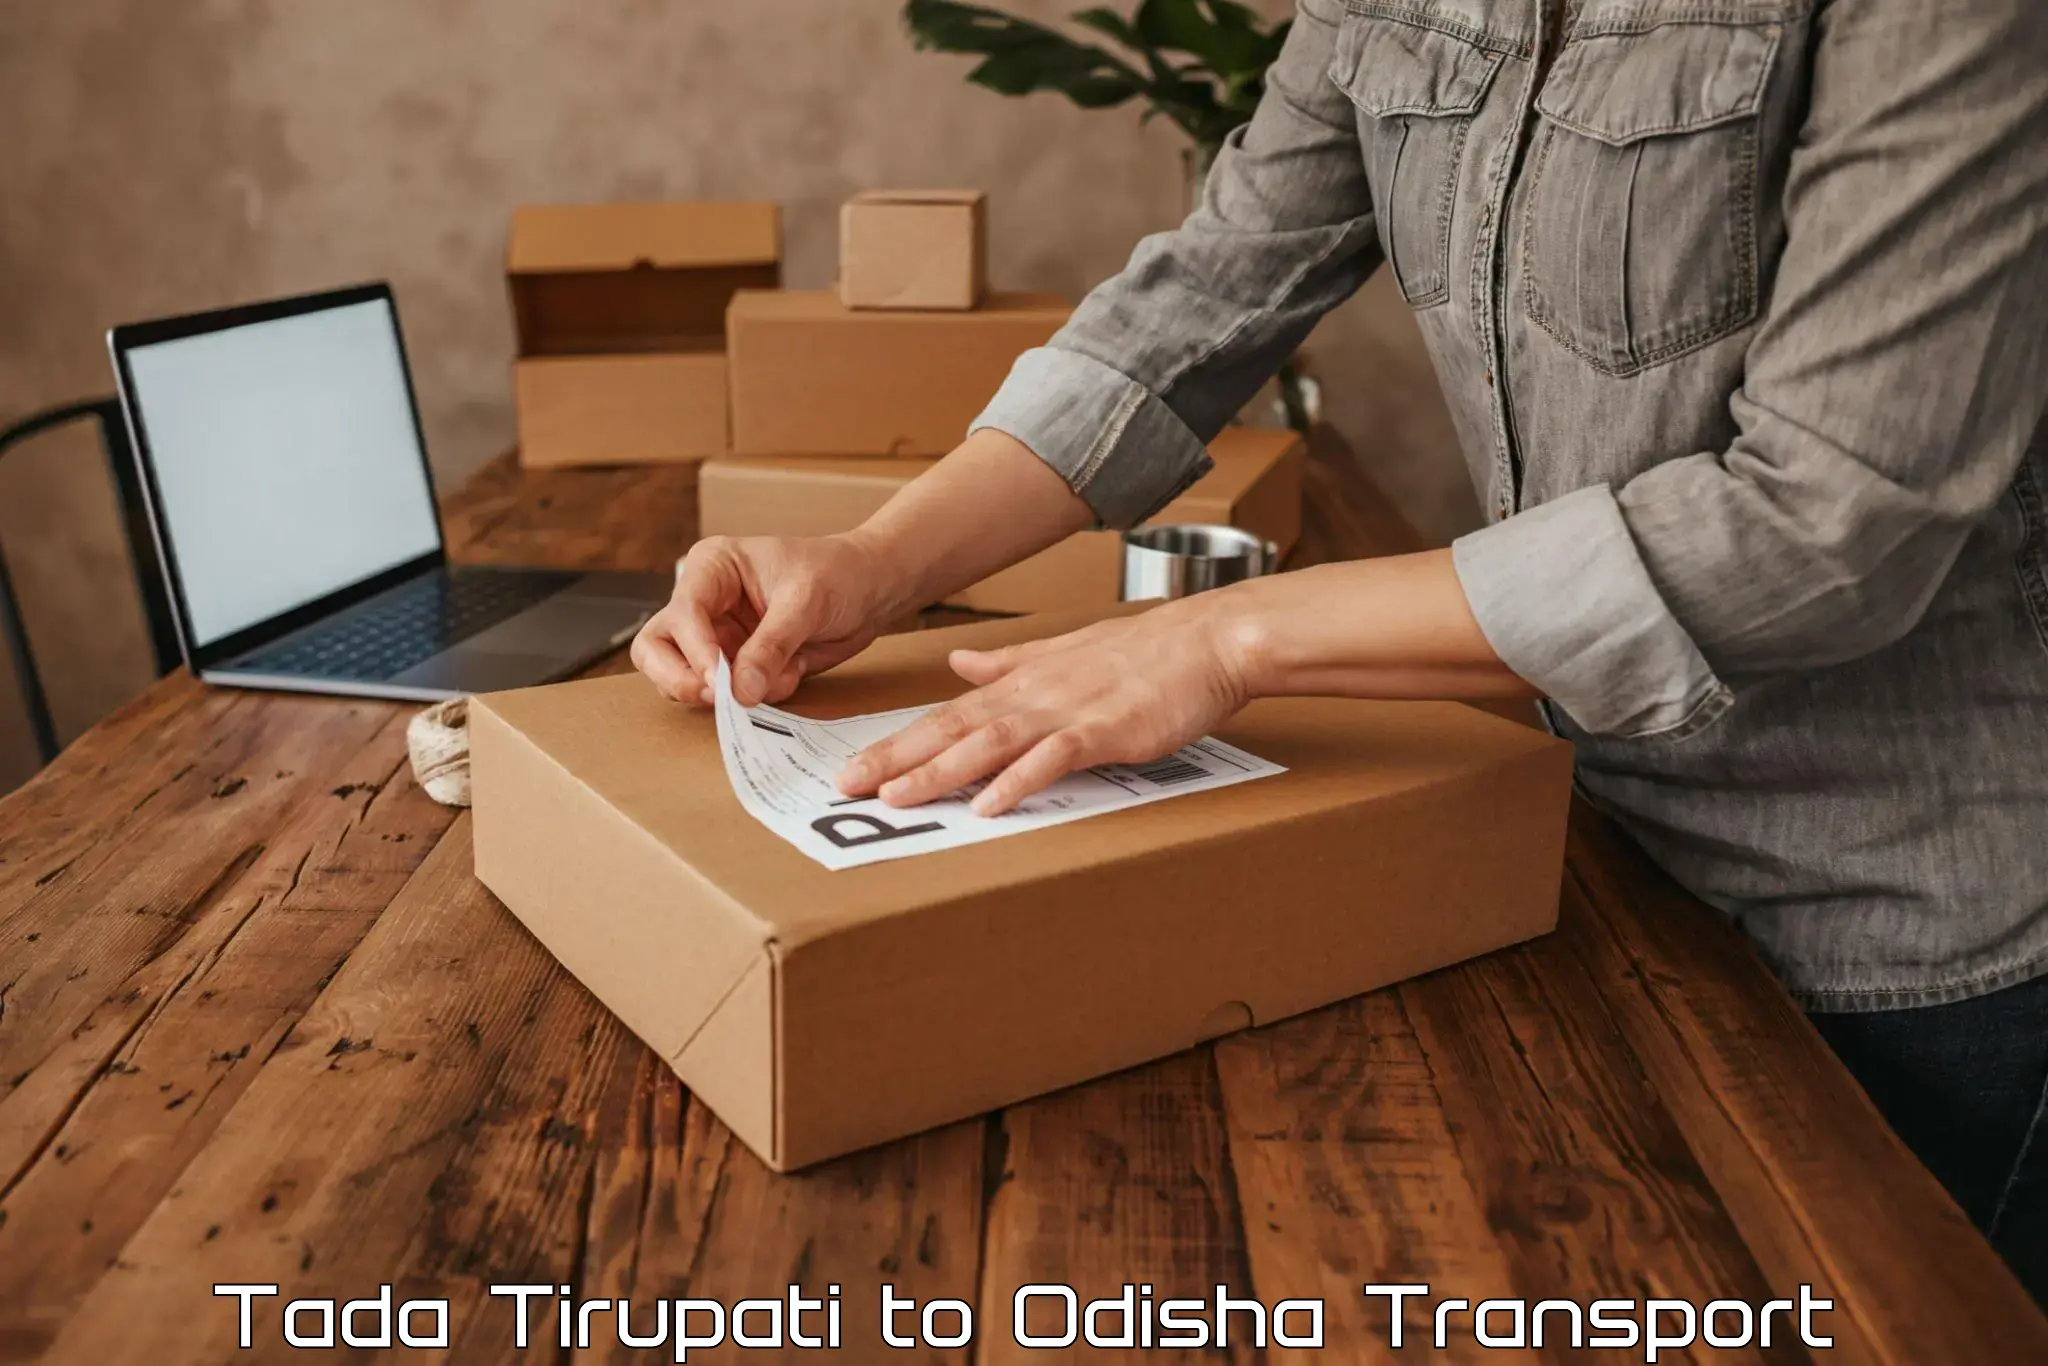 All India transport service Tada Tirupati to Baleswar